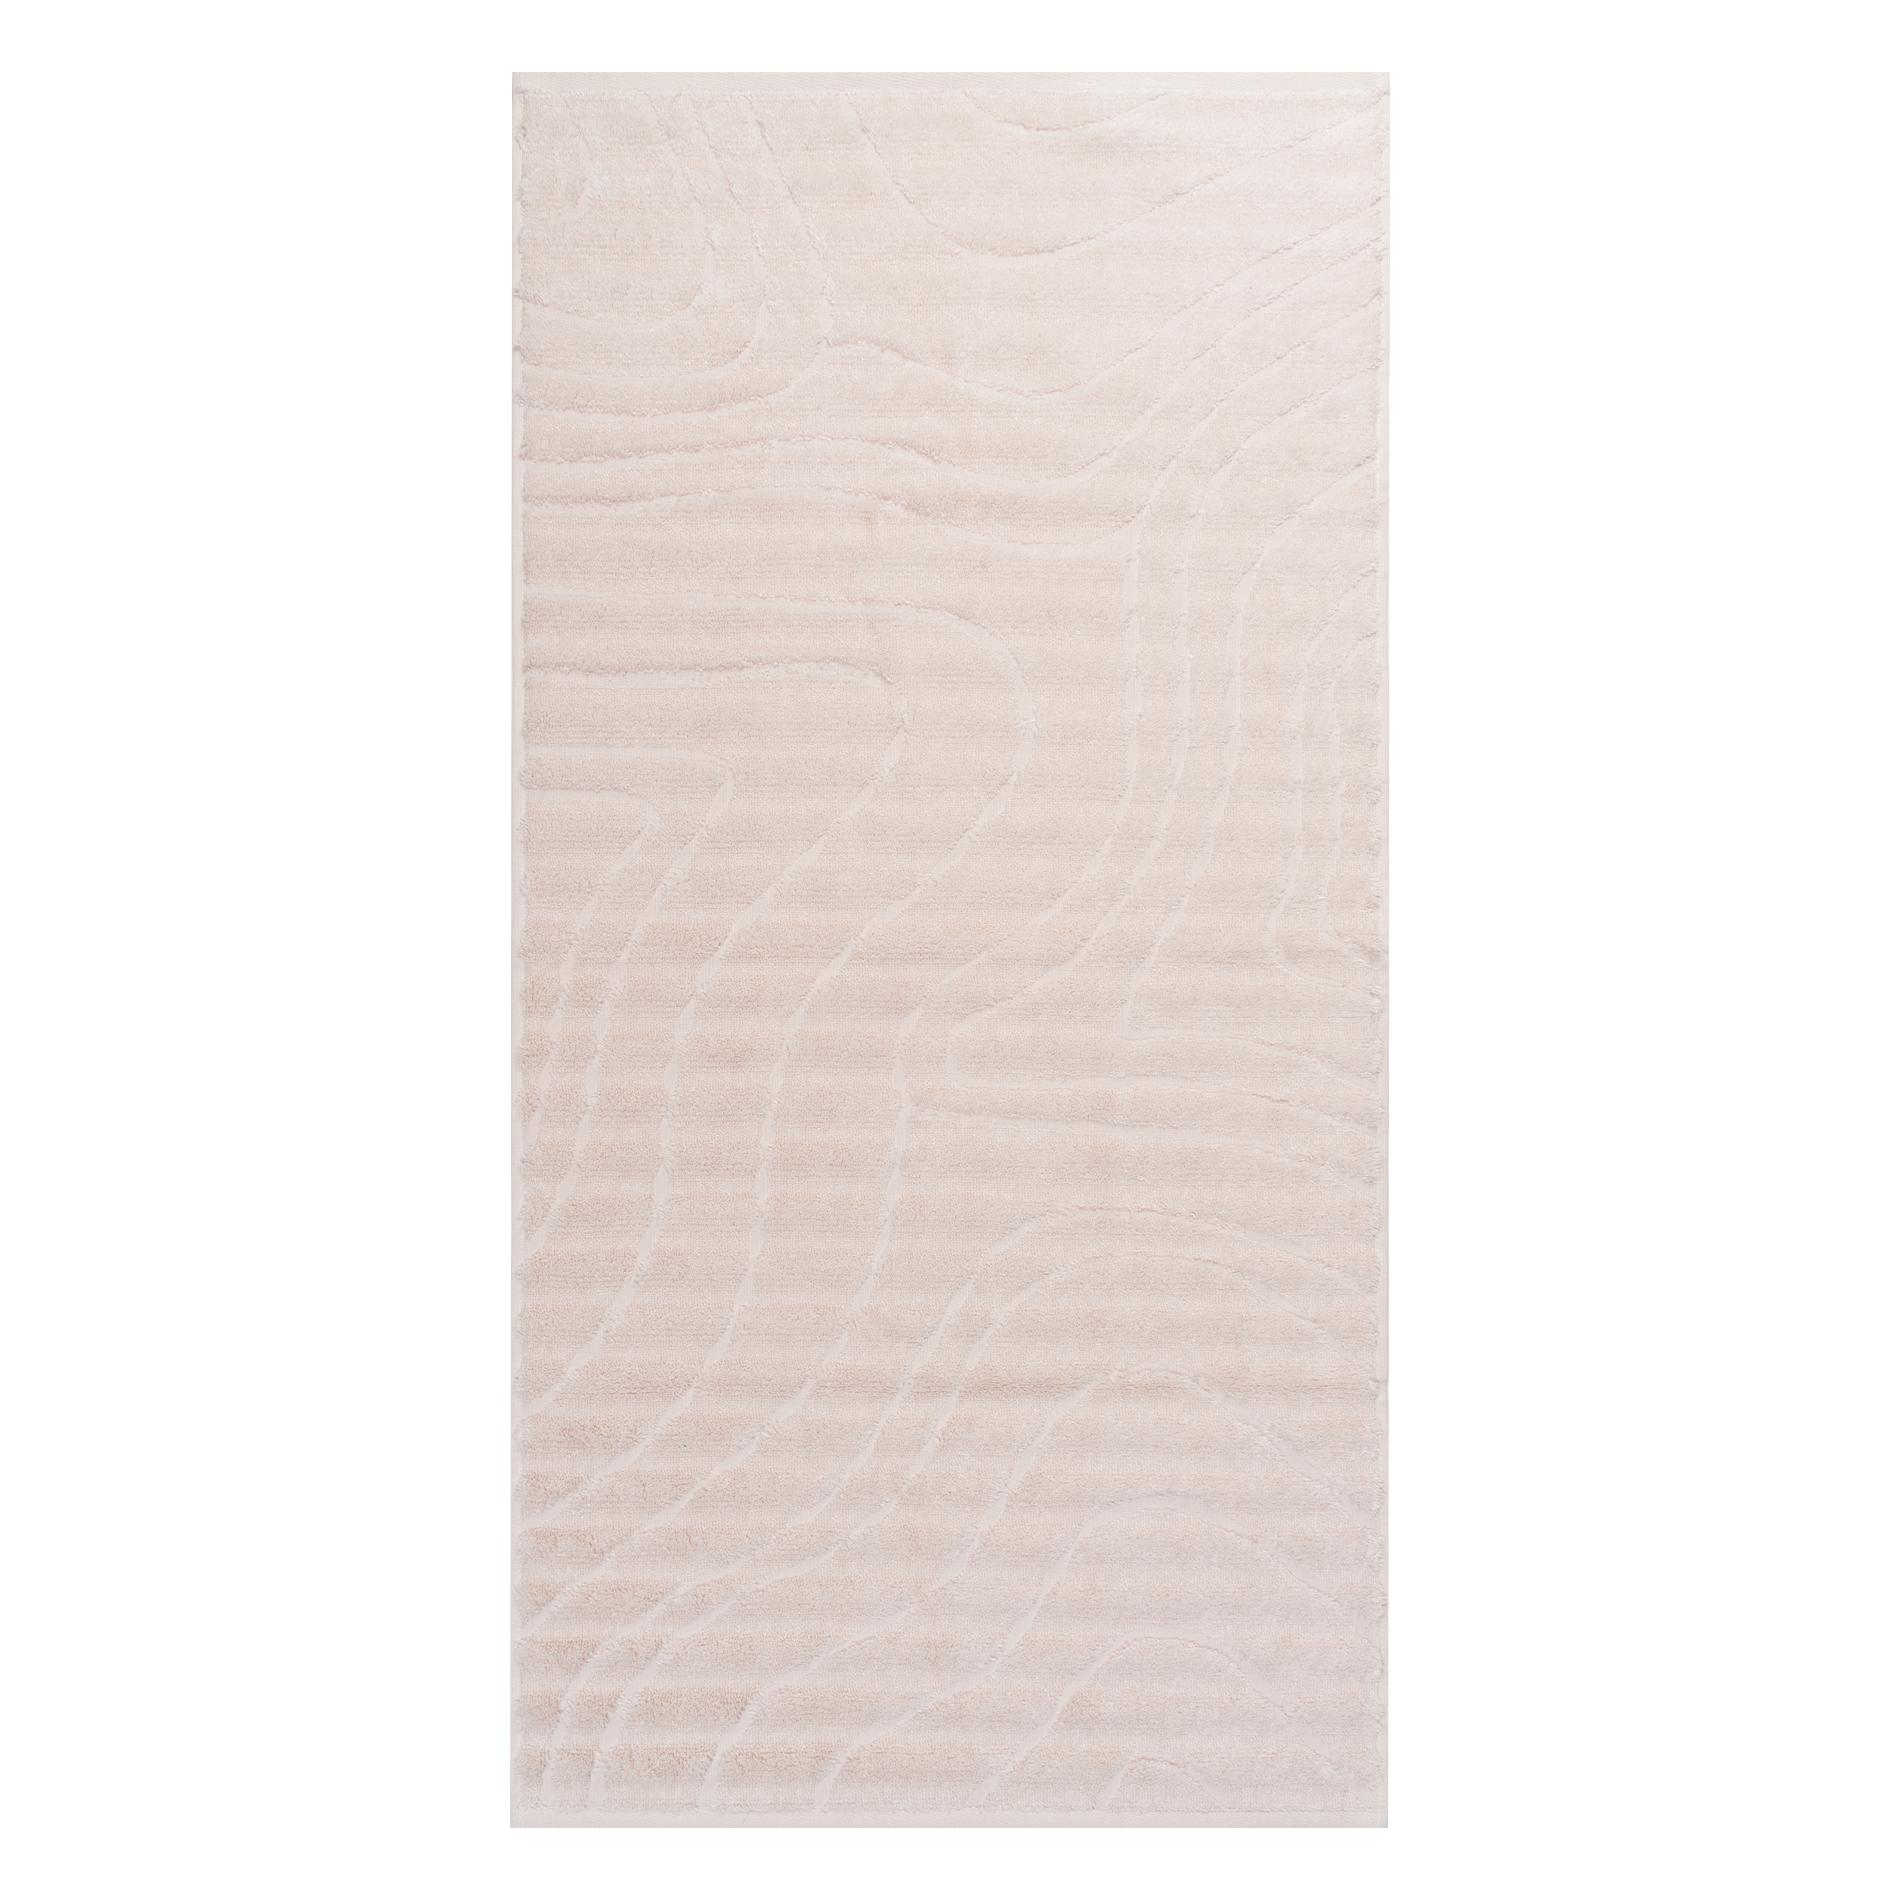 Махровое полотенце Cleanelly Albero bianco молочное 50Х100 см